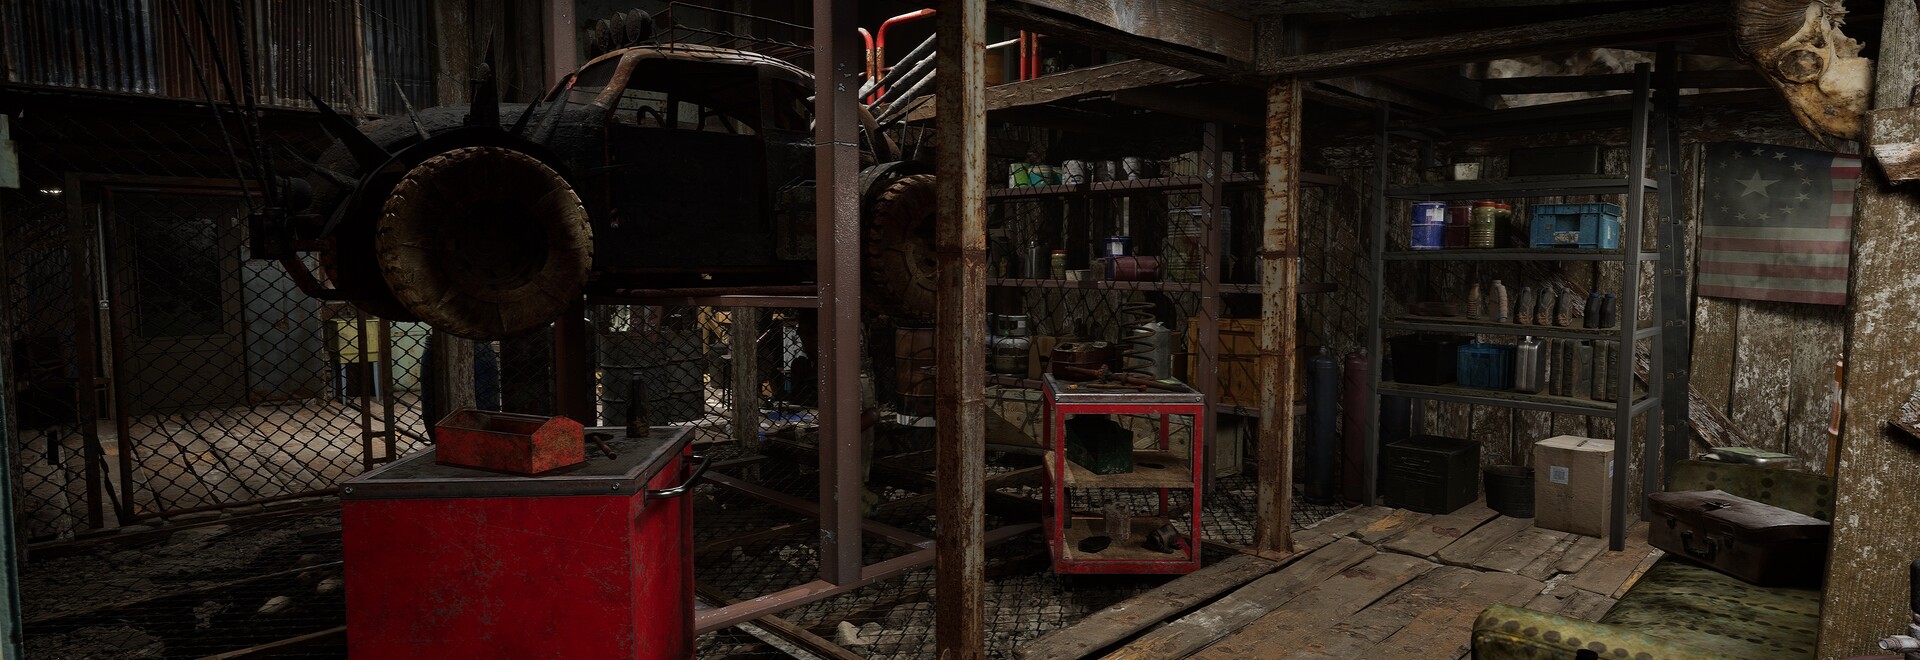 Fallout 4 башня 1dl 109 сигнал бедствия фото 113